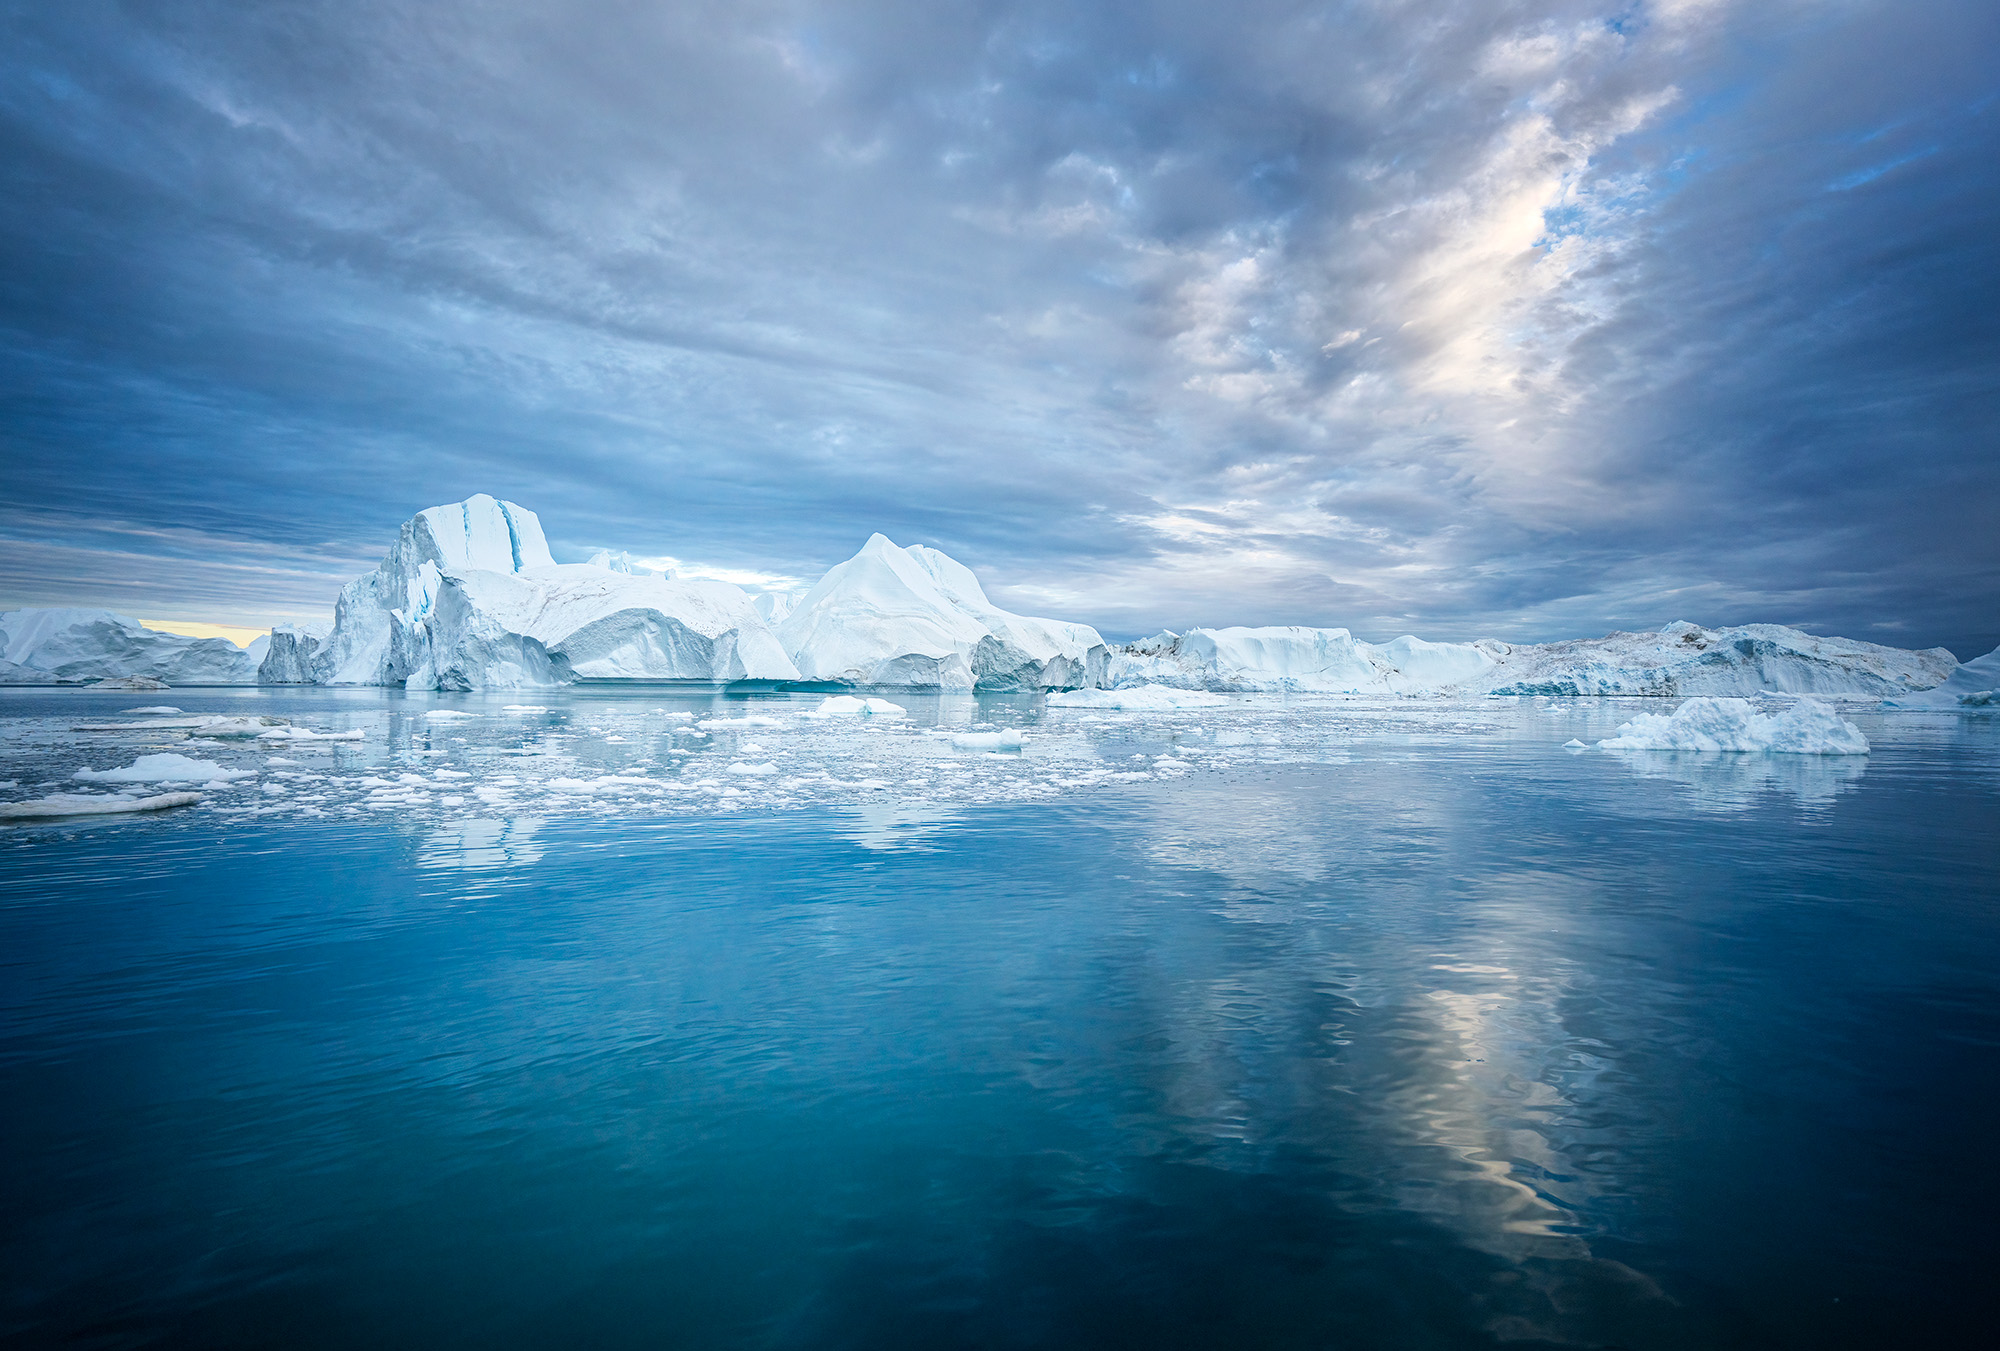 "Arctic Mirrors" is a captivating portrayal of Disko Bay, near Illulisat, Greenland. Splitting the frame, a majestic iceberg...